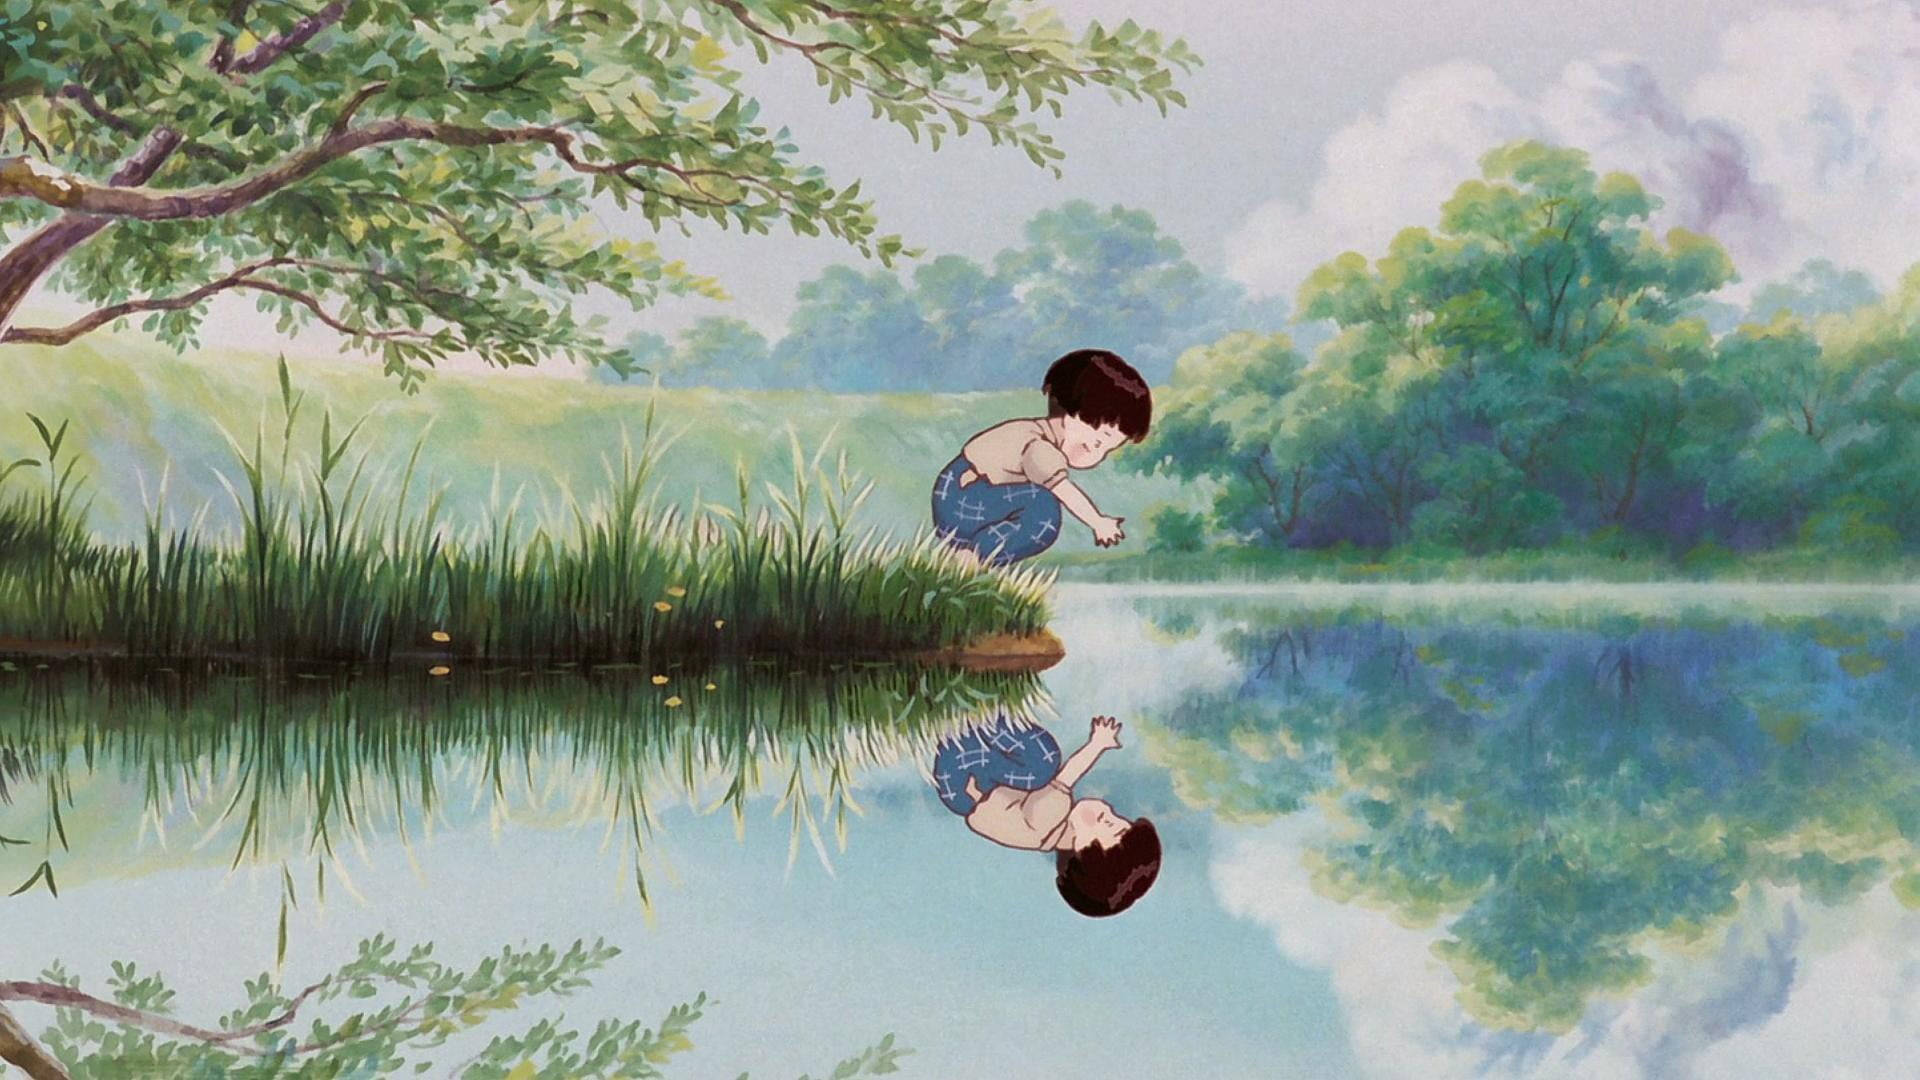 Studio Ghibli Scenery Of Water Reflection